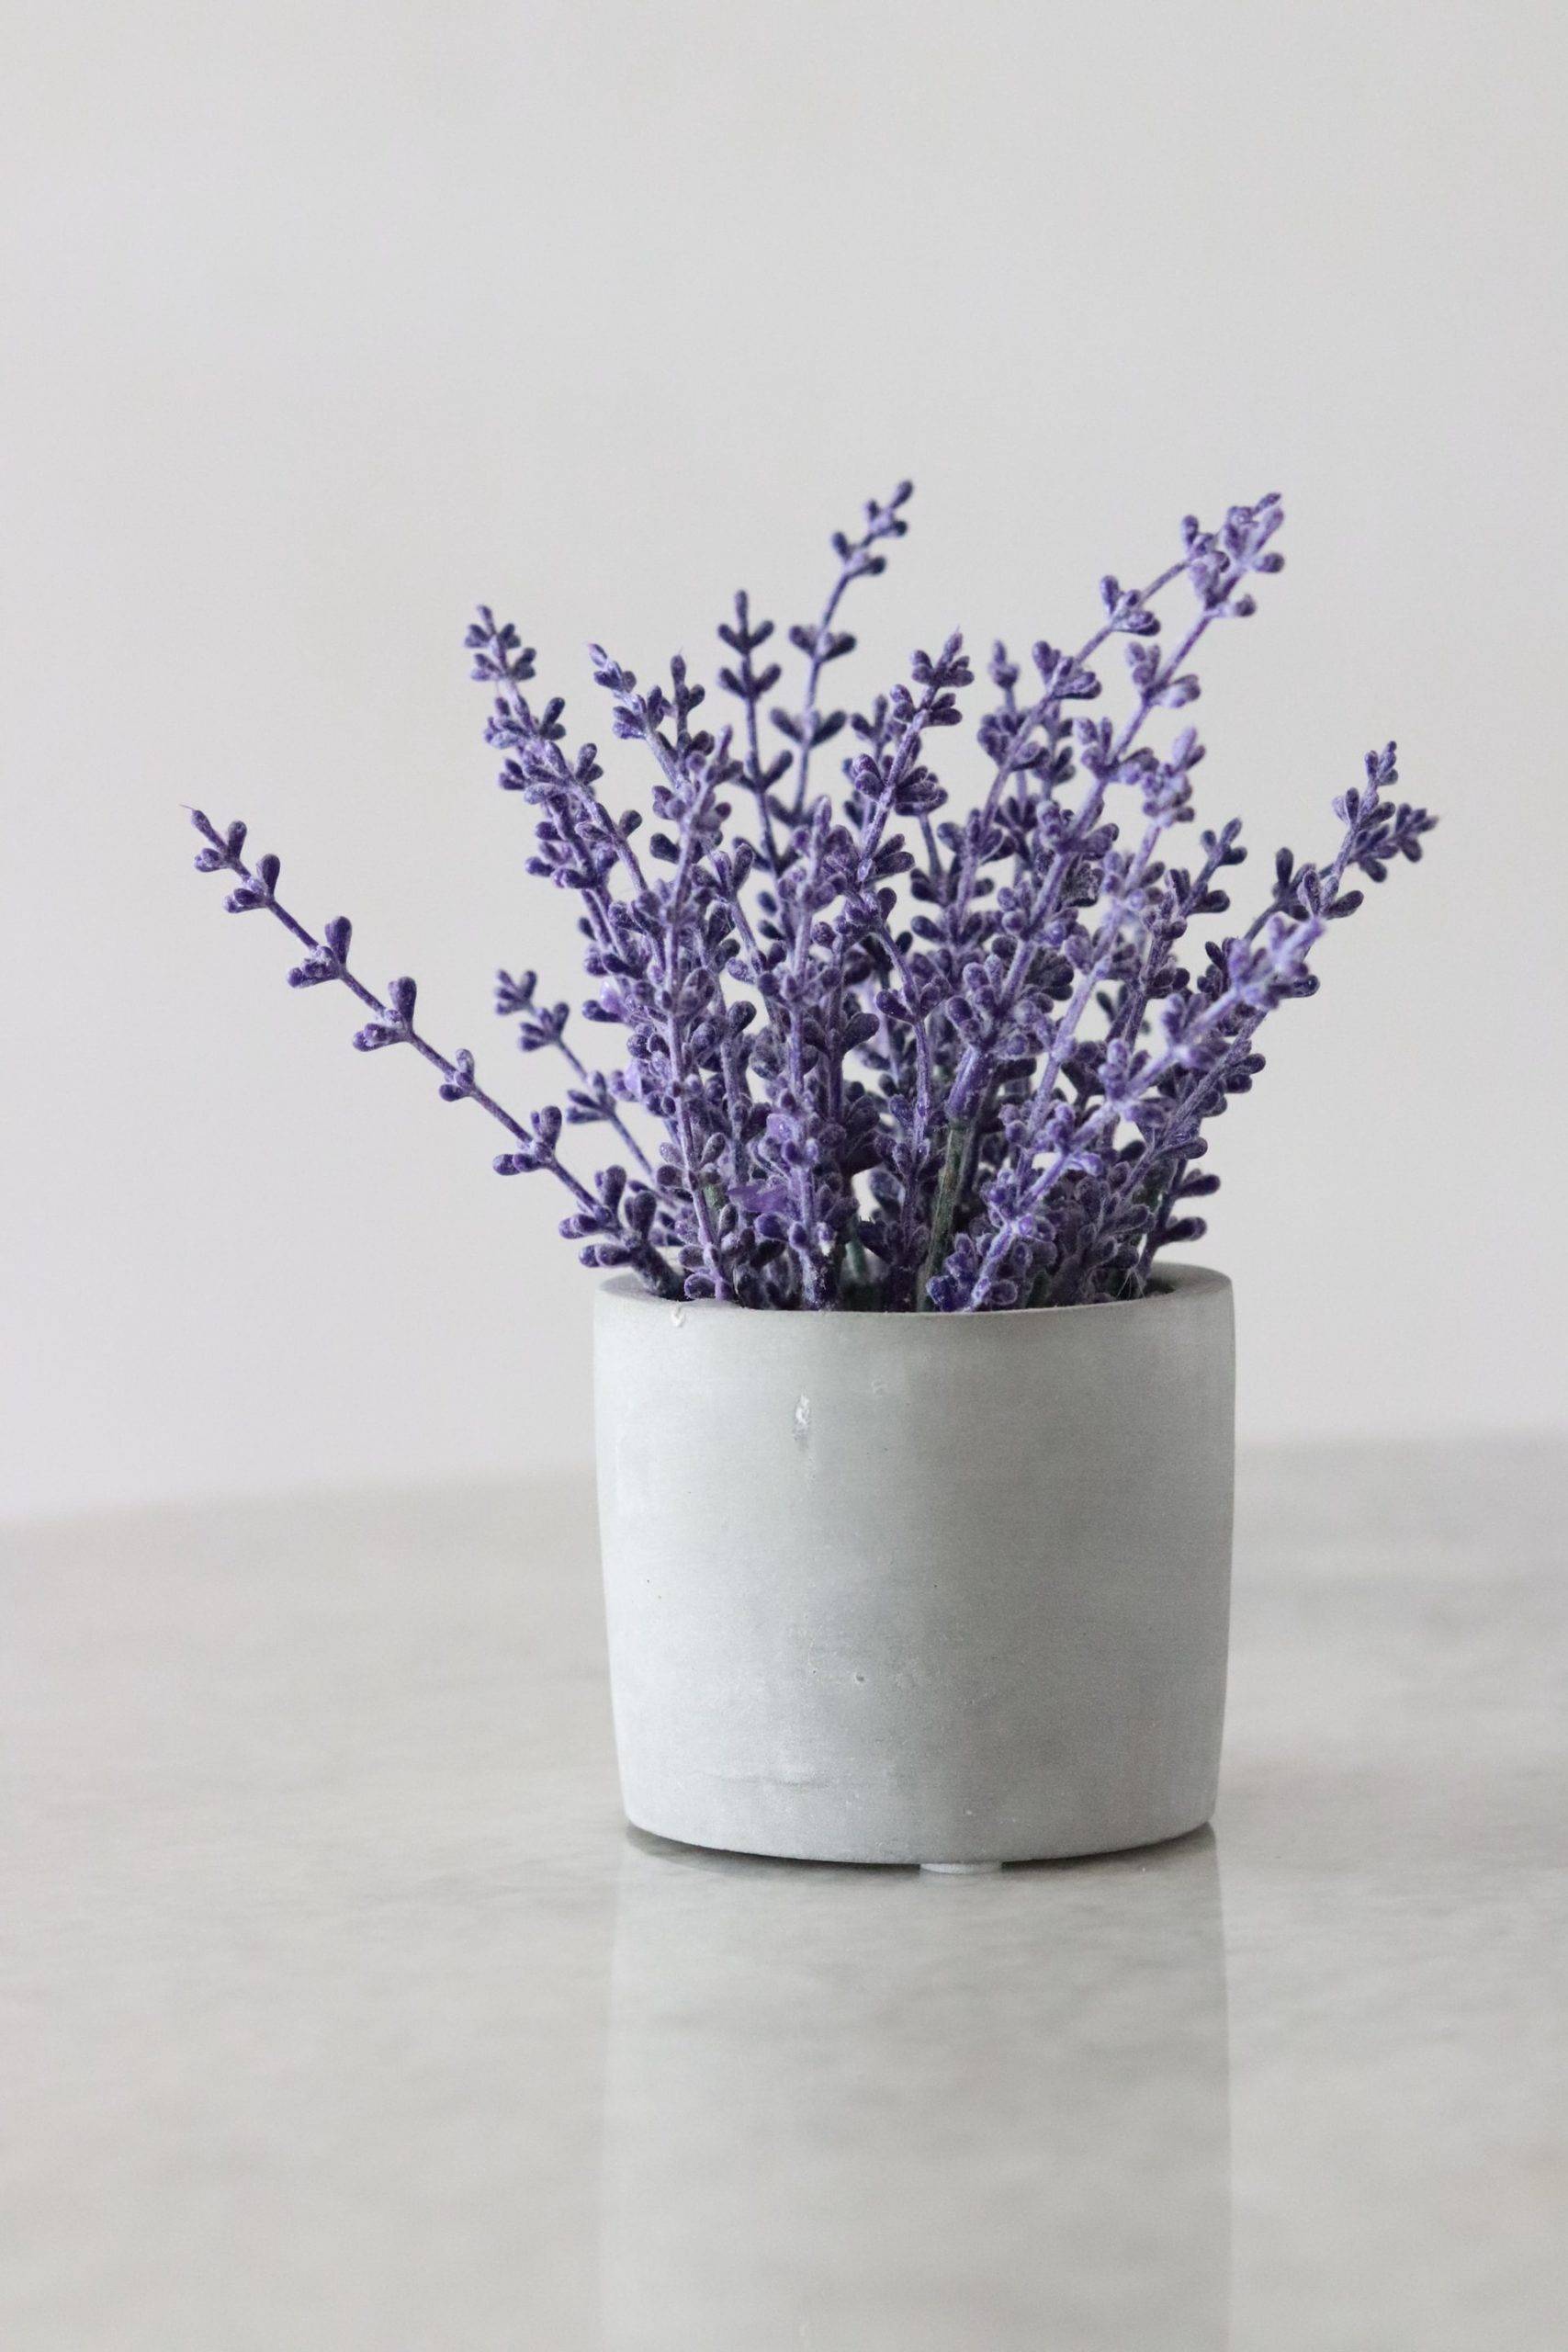 Lavender scent promotes relaxation (via Unsplash)